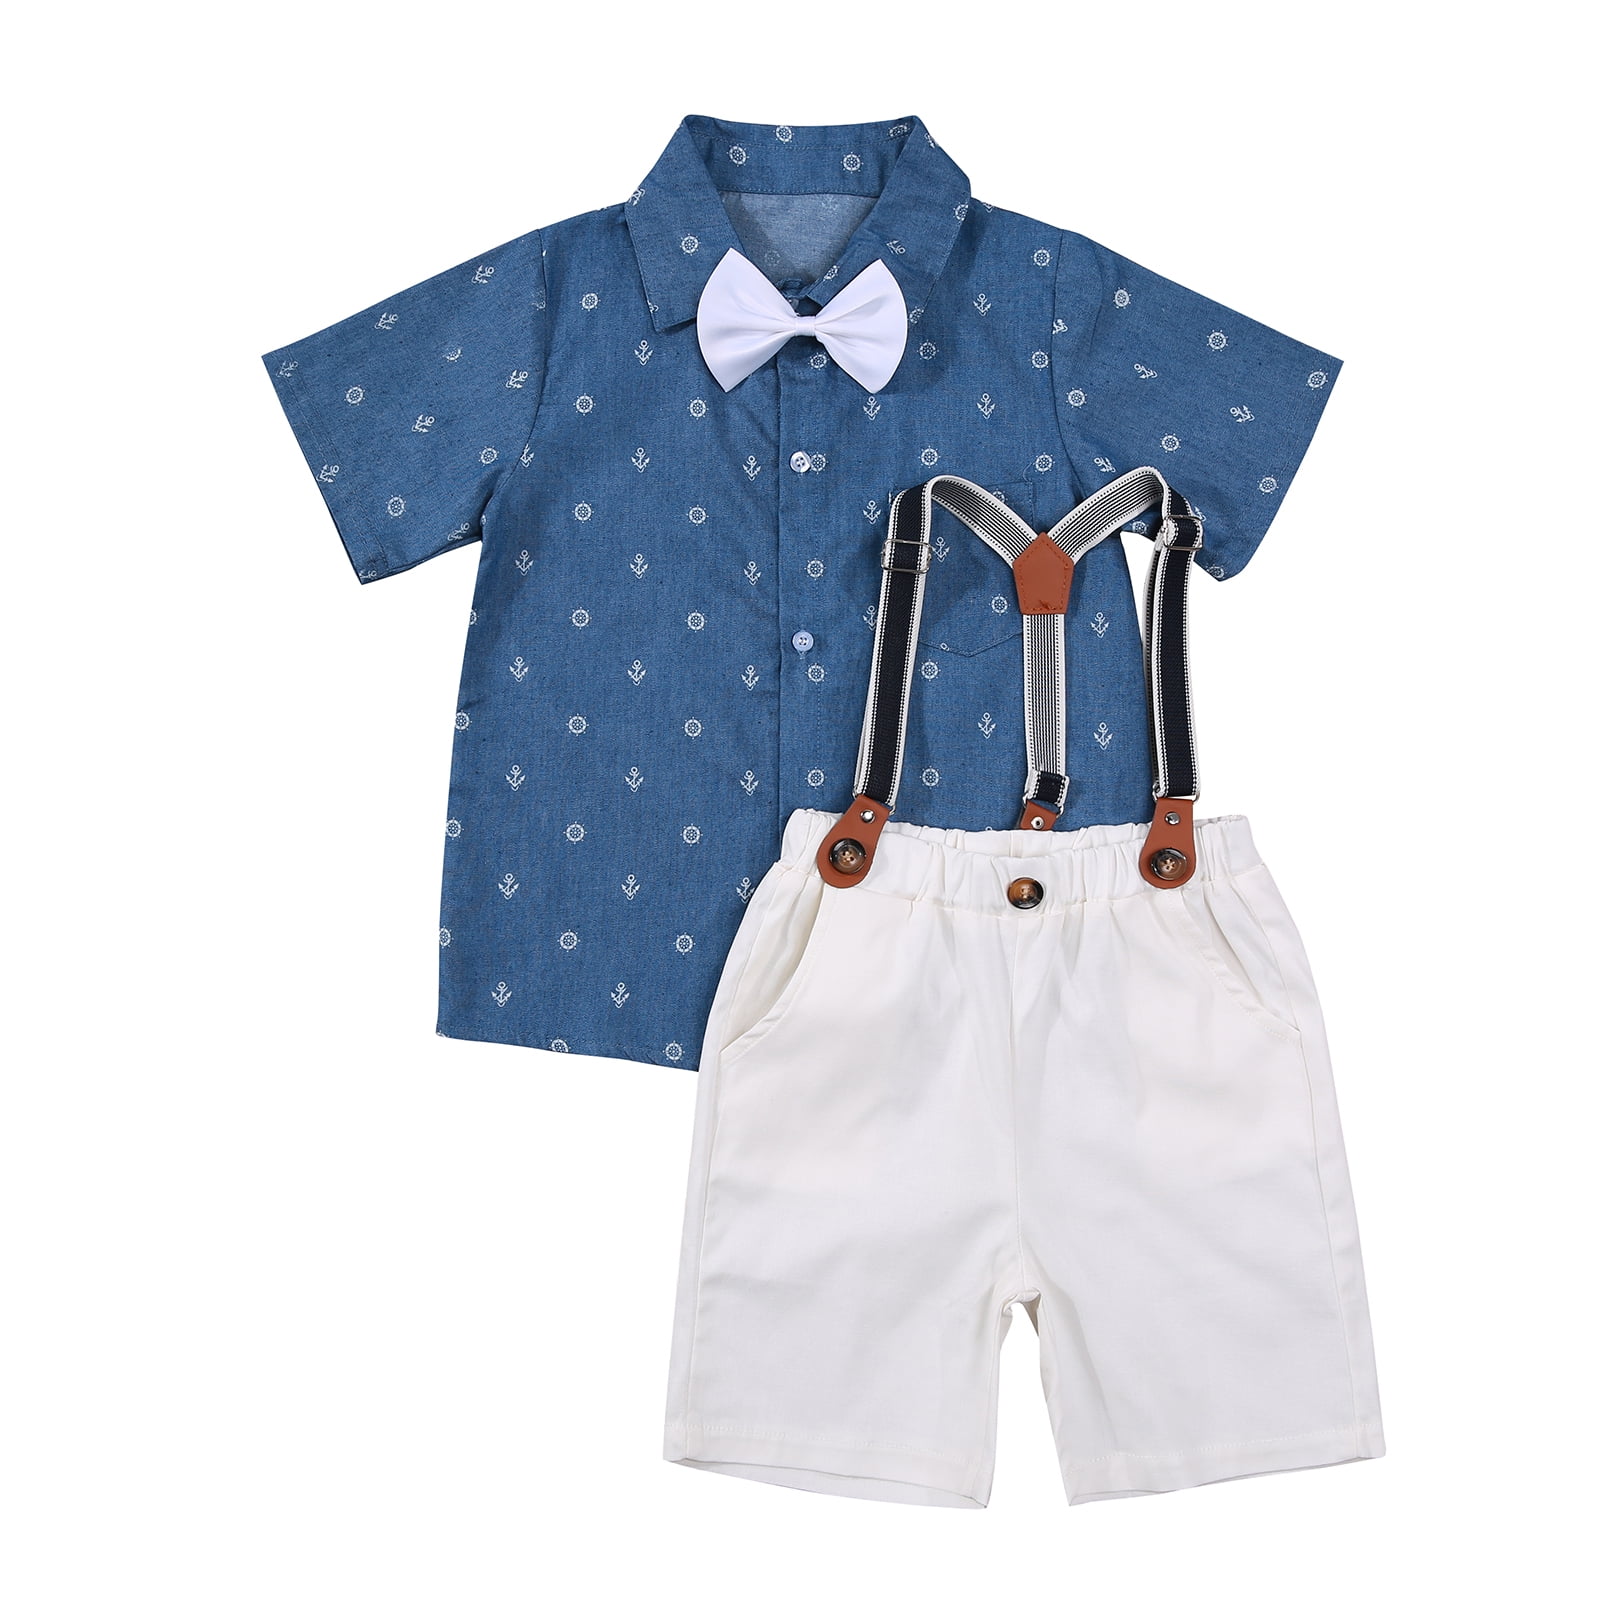 Baby Boys Gentleman Clothes Outfits Set Newborn Sailboat Short Sleeve Shirt+Bow Tie+Bib Pants Jumpsuit Overalls Suit 